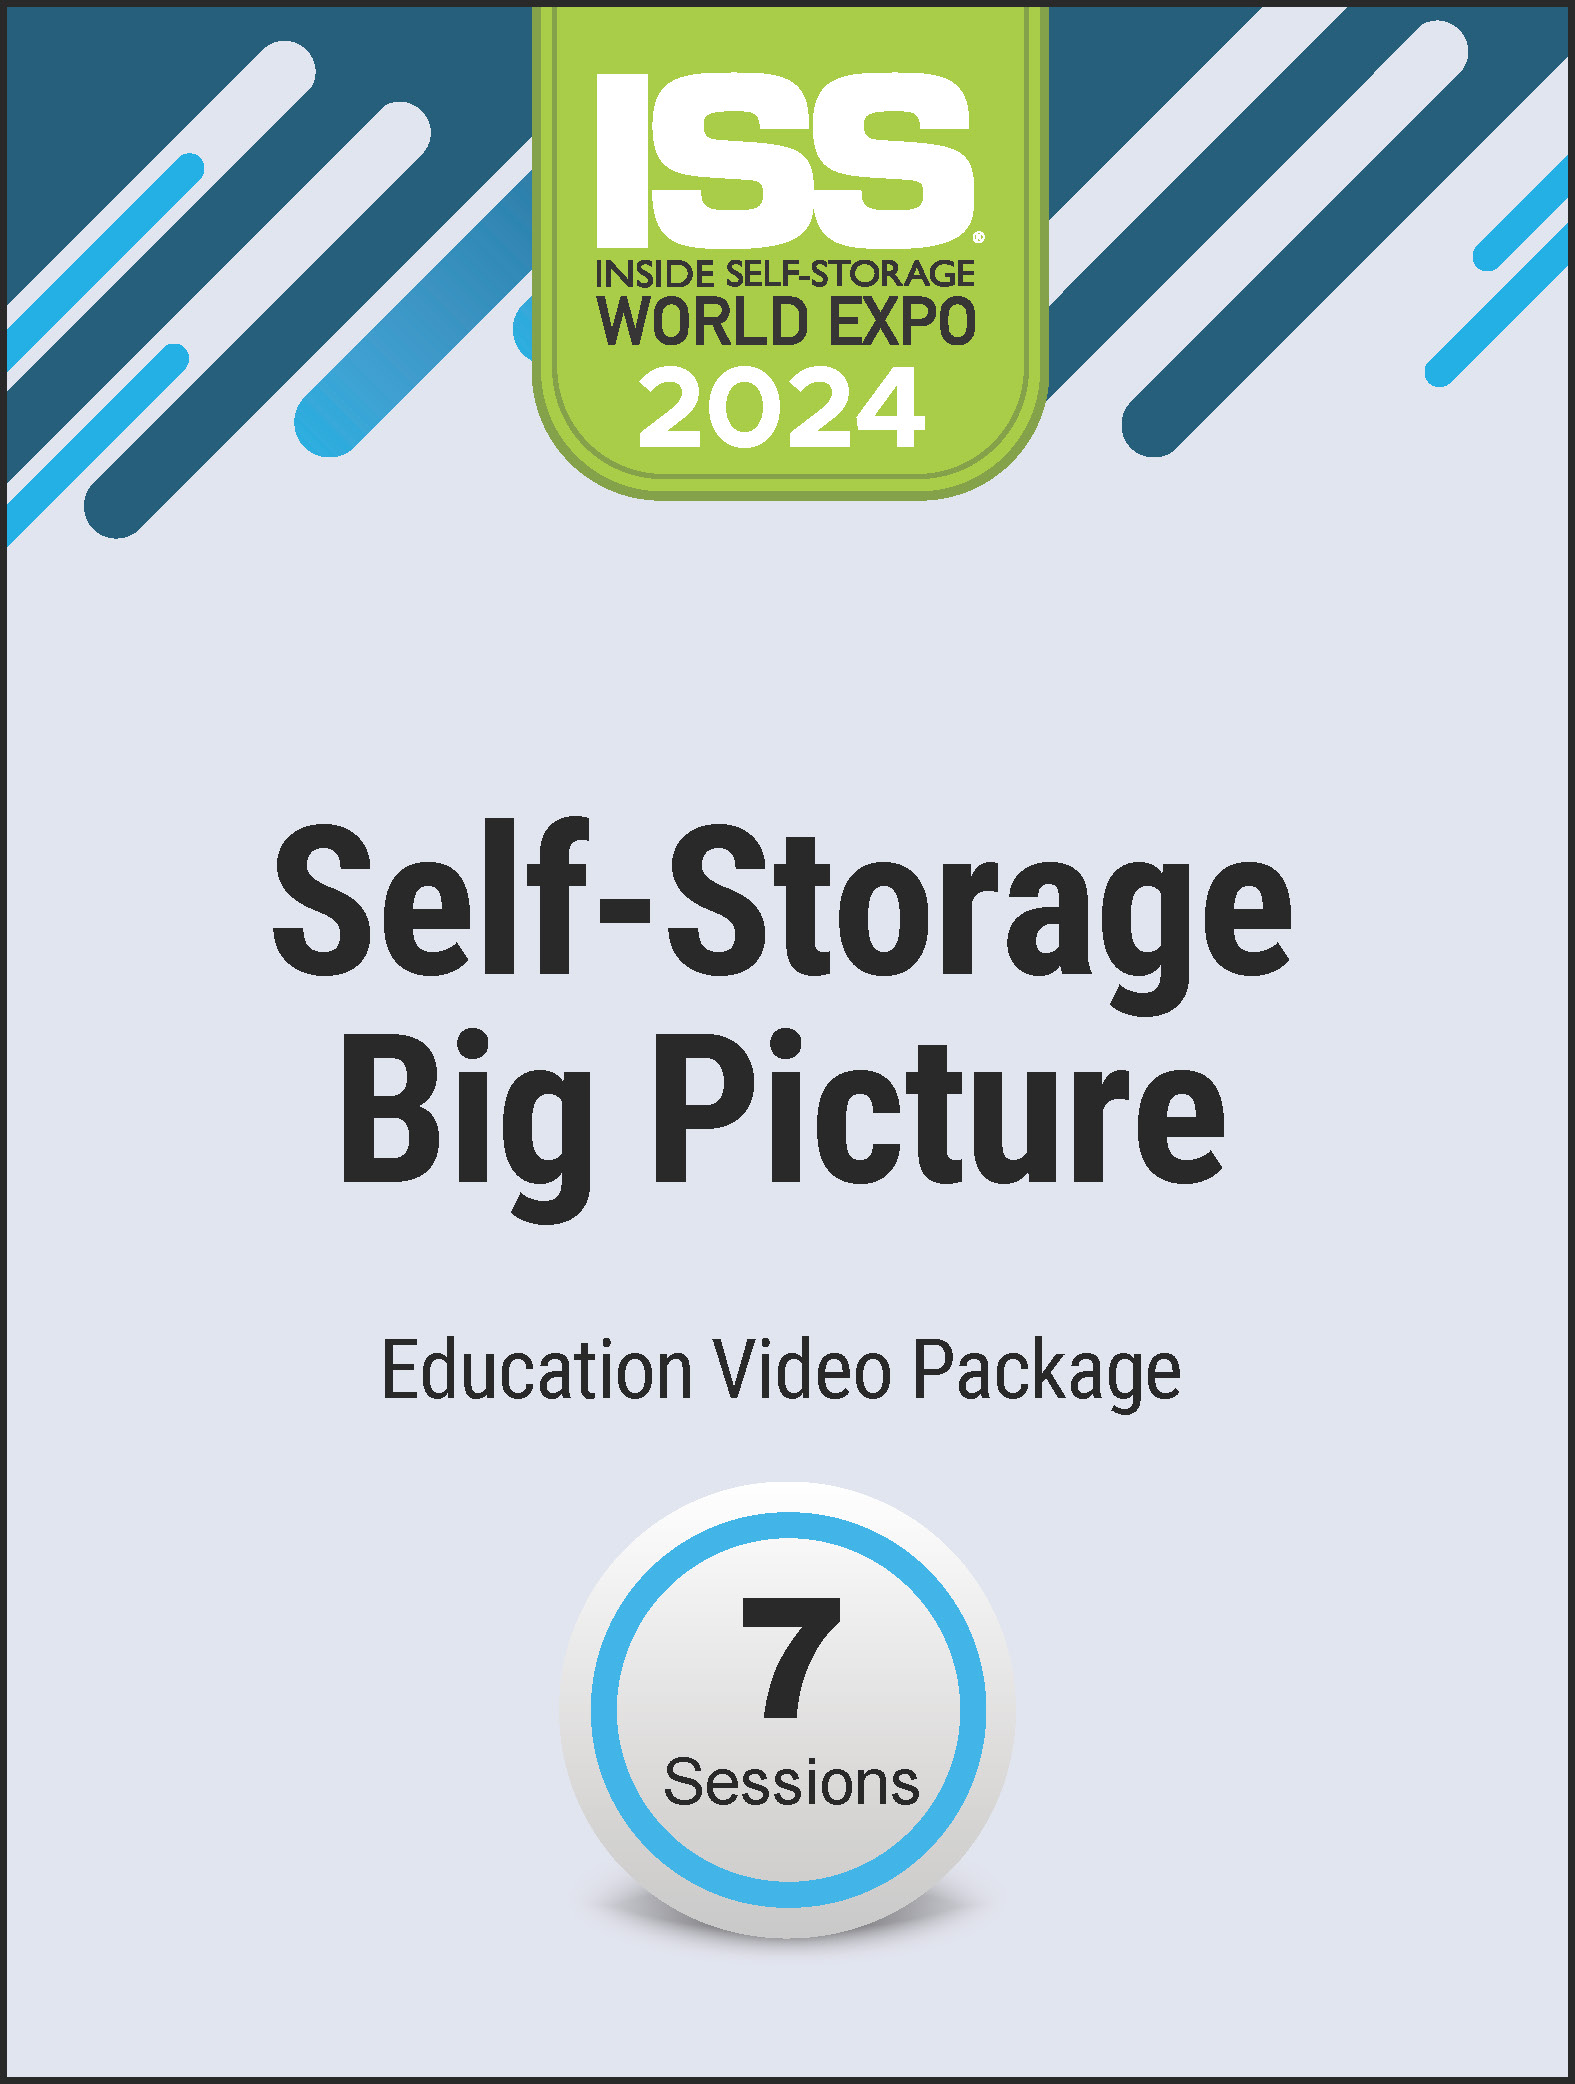 Video Pre-Order PDF - Self-Storage Big Picture 2024 Education Video Package